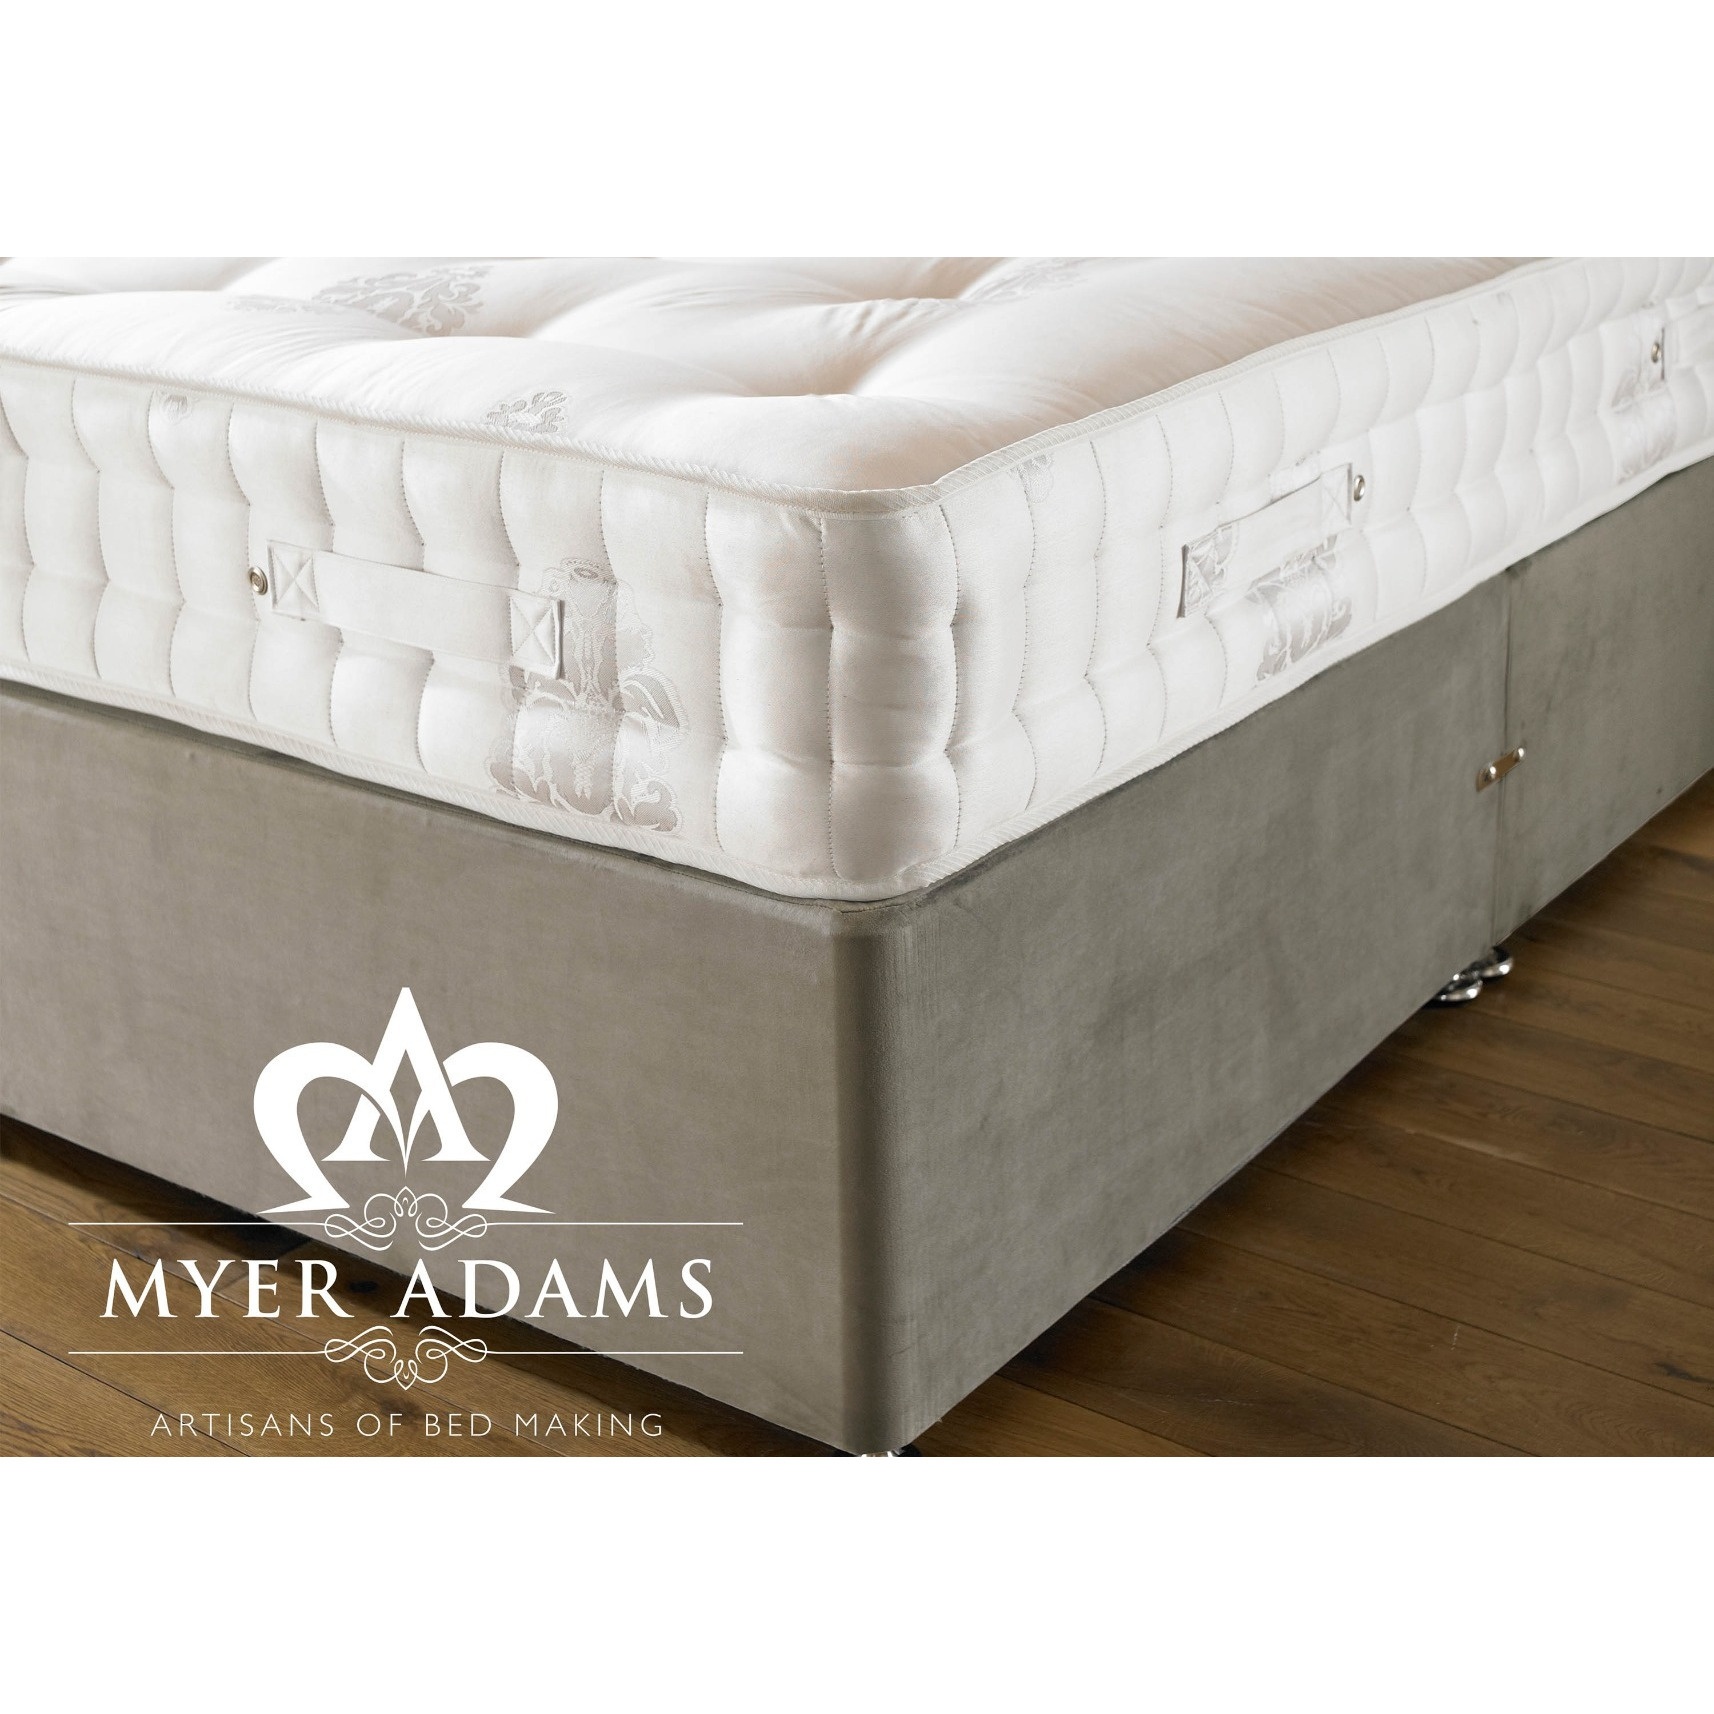 Myer Adams Natural Sleep 1000 Mattress Single - image 1